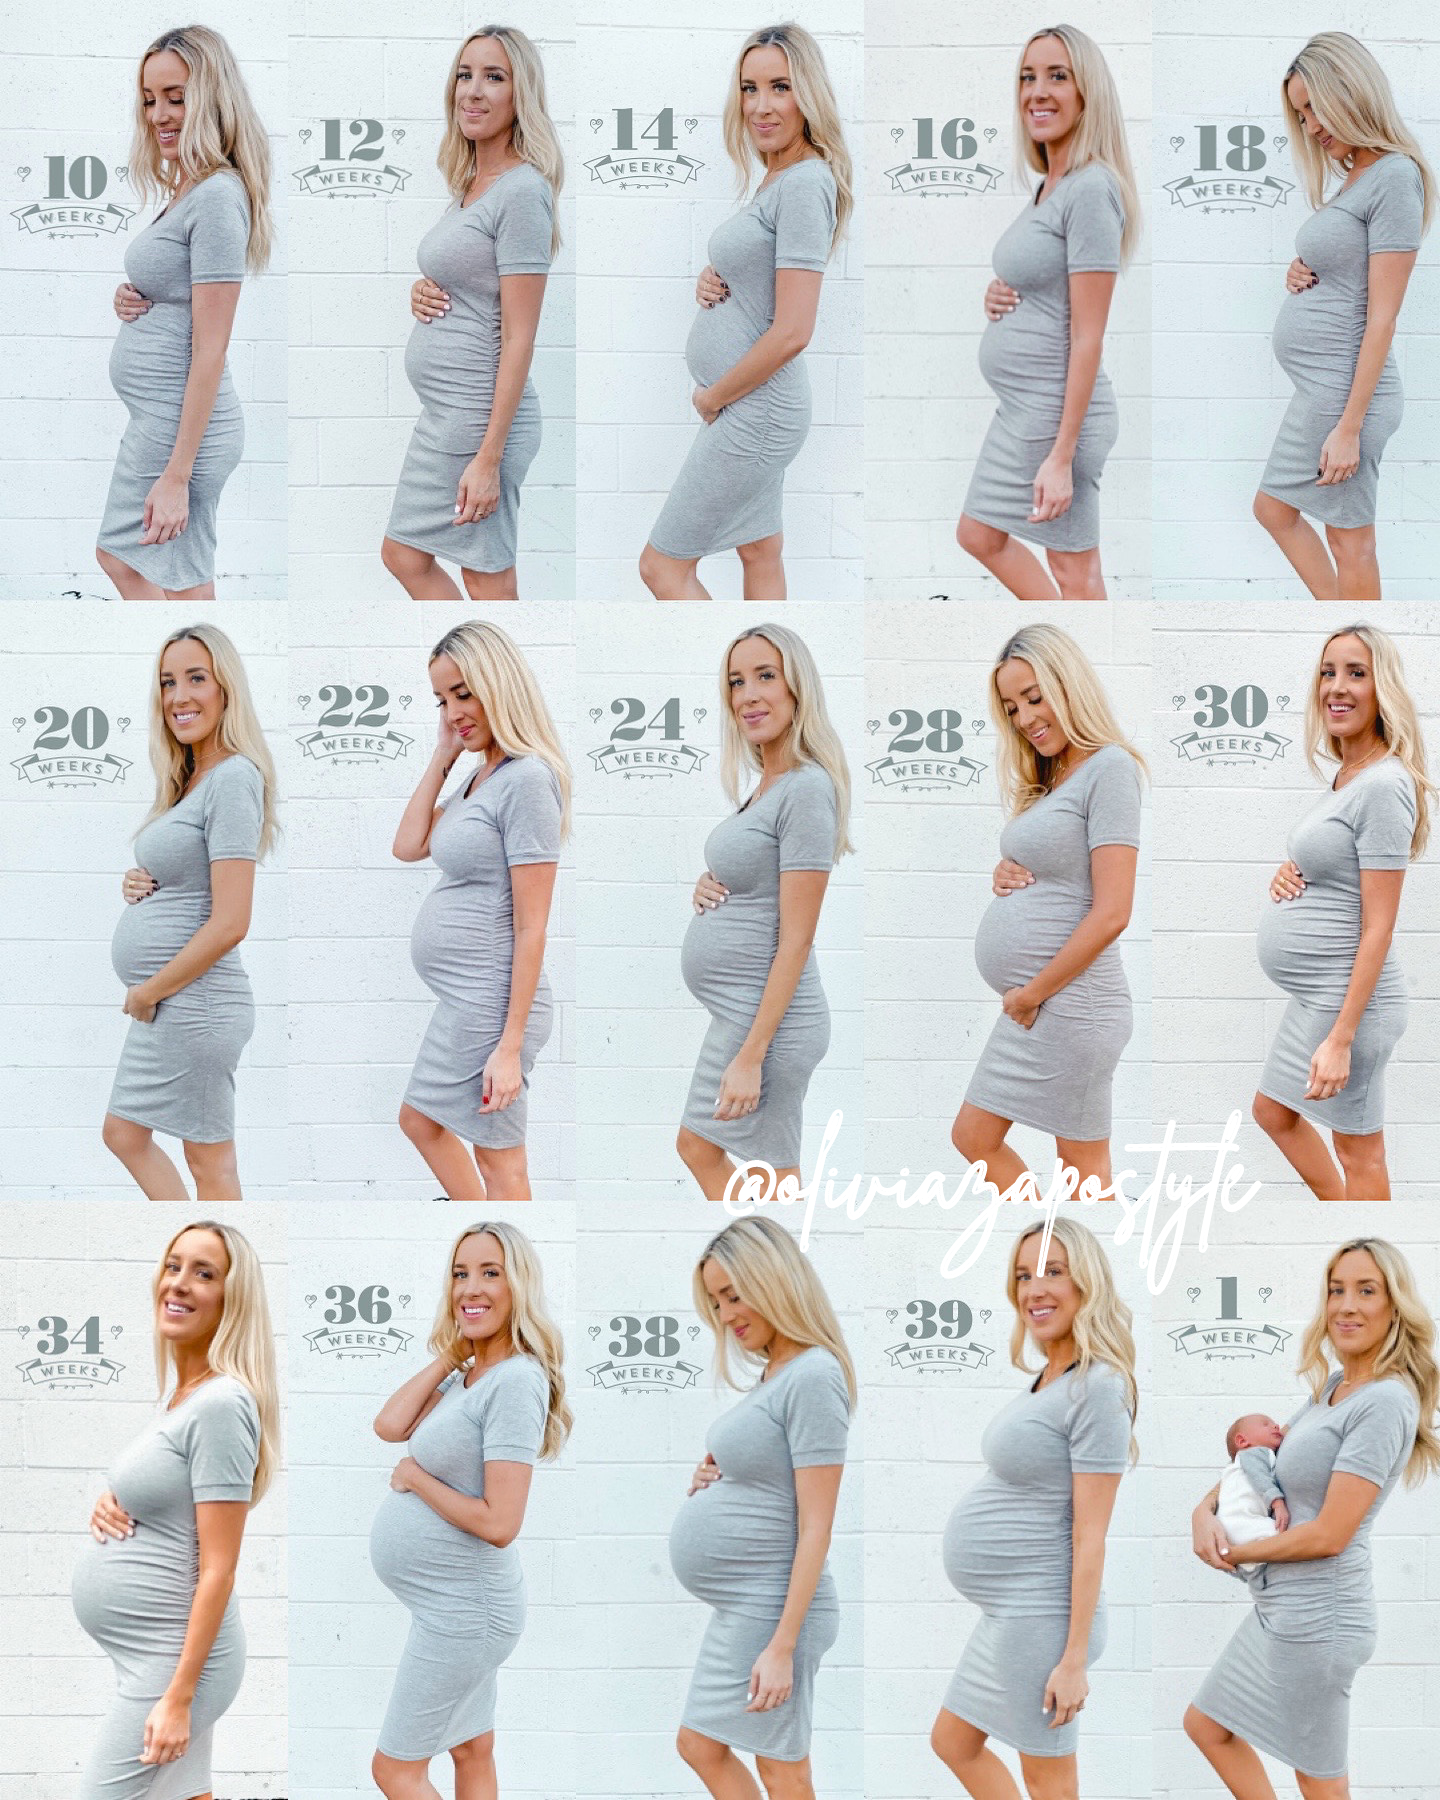 Pregnancy BABY BUMP Progression/Transformation, 5 - 41 Weeks